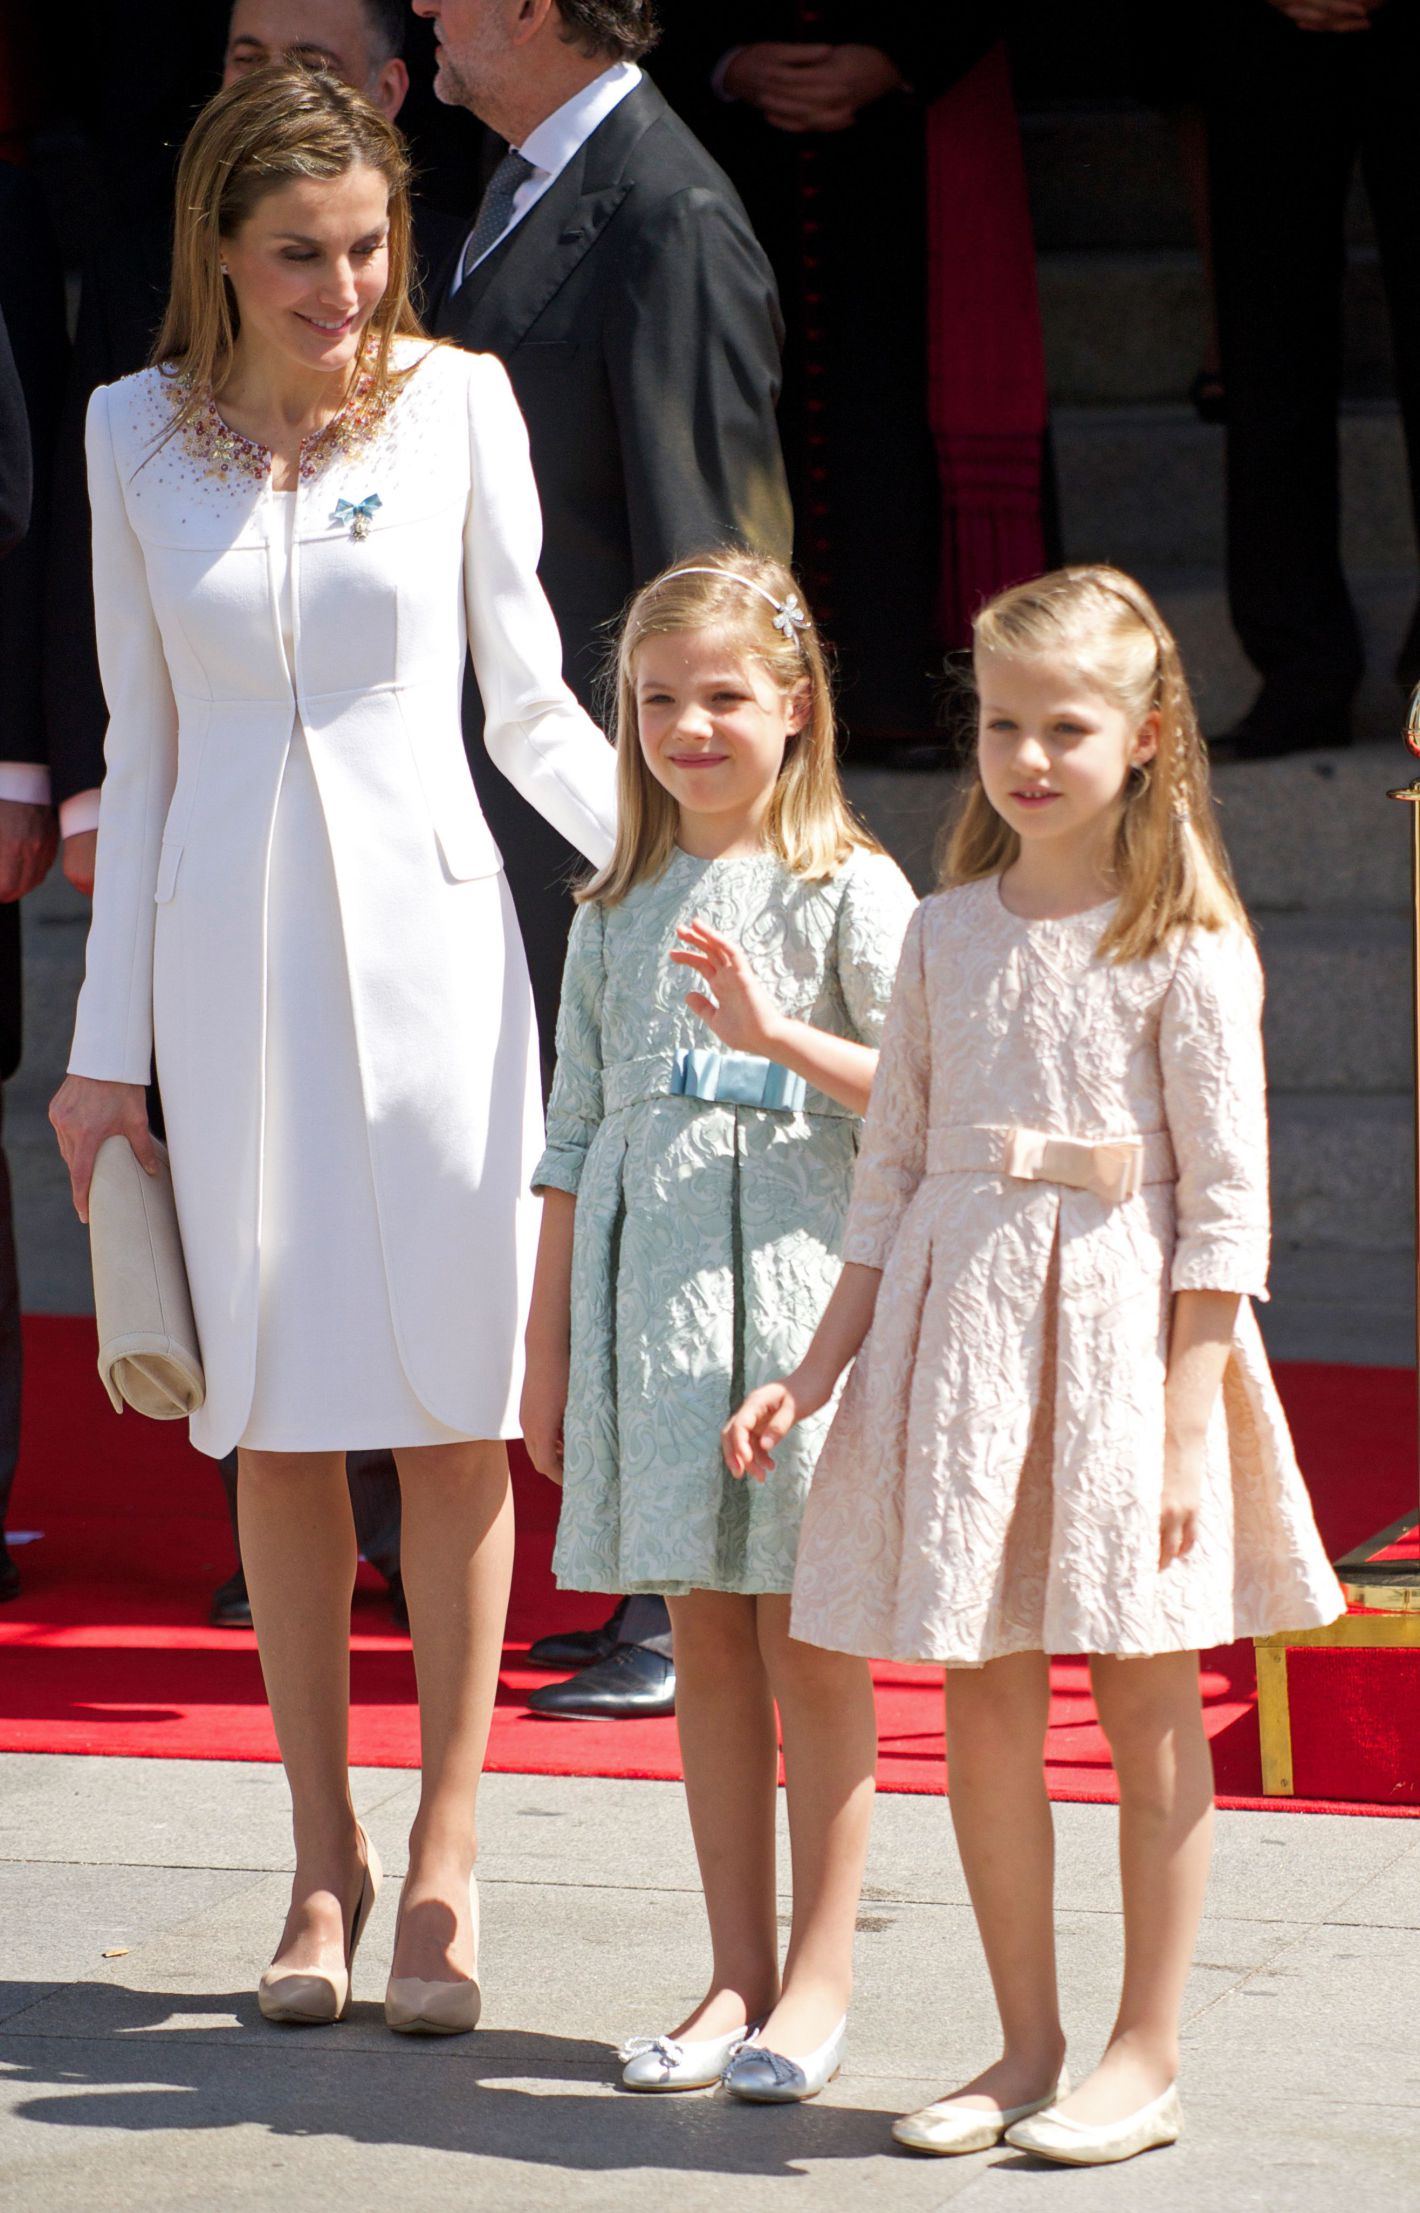 Mandatory Credit: Photo by REX/Shutterstock (3845261n) Queen Letizia, Princess Leonor and Princess Sofia Proclamation of King Felipe VI, Madrid, Spain - 19 Jun 2014